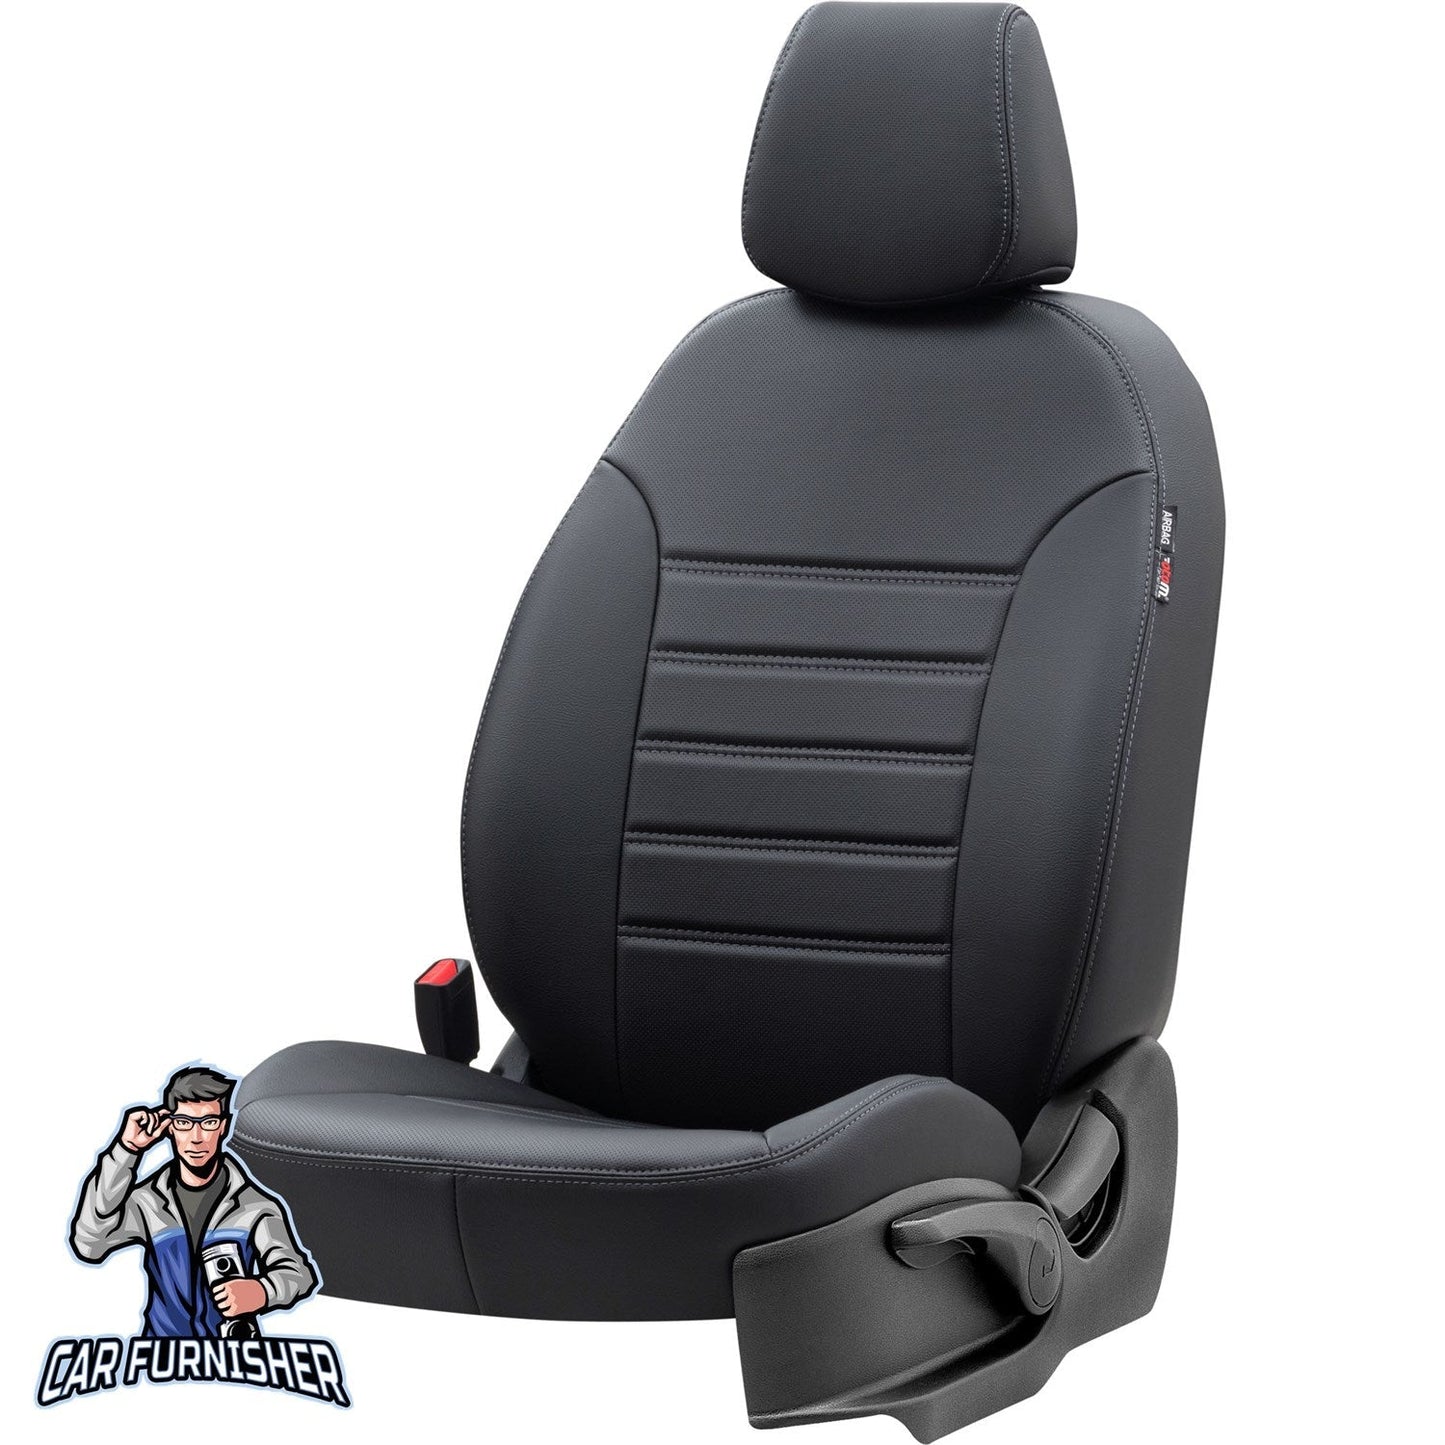 Honda CRV Seat Covers Istanbul Leather Design Black Leather